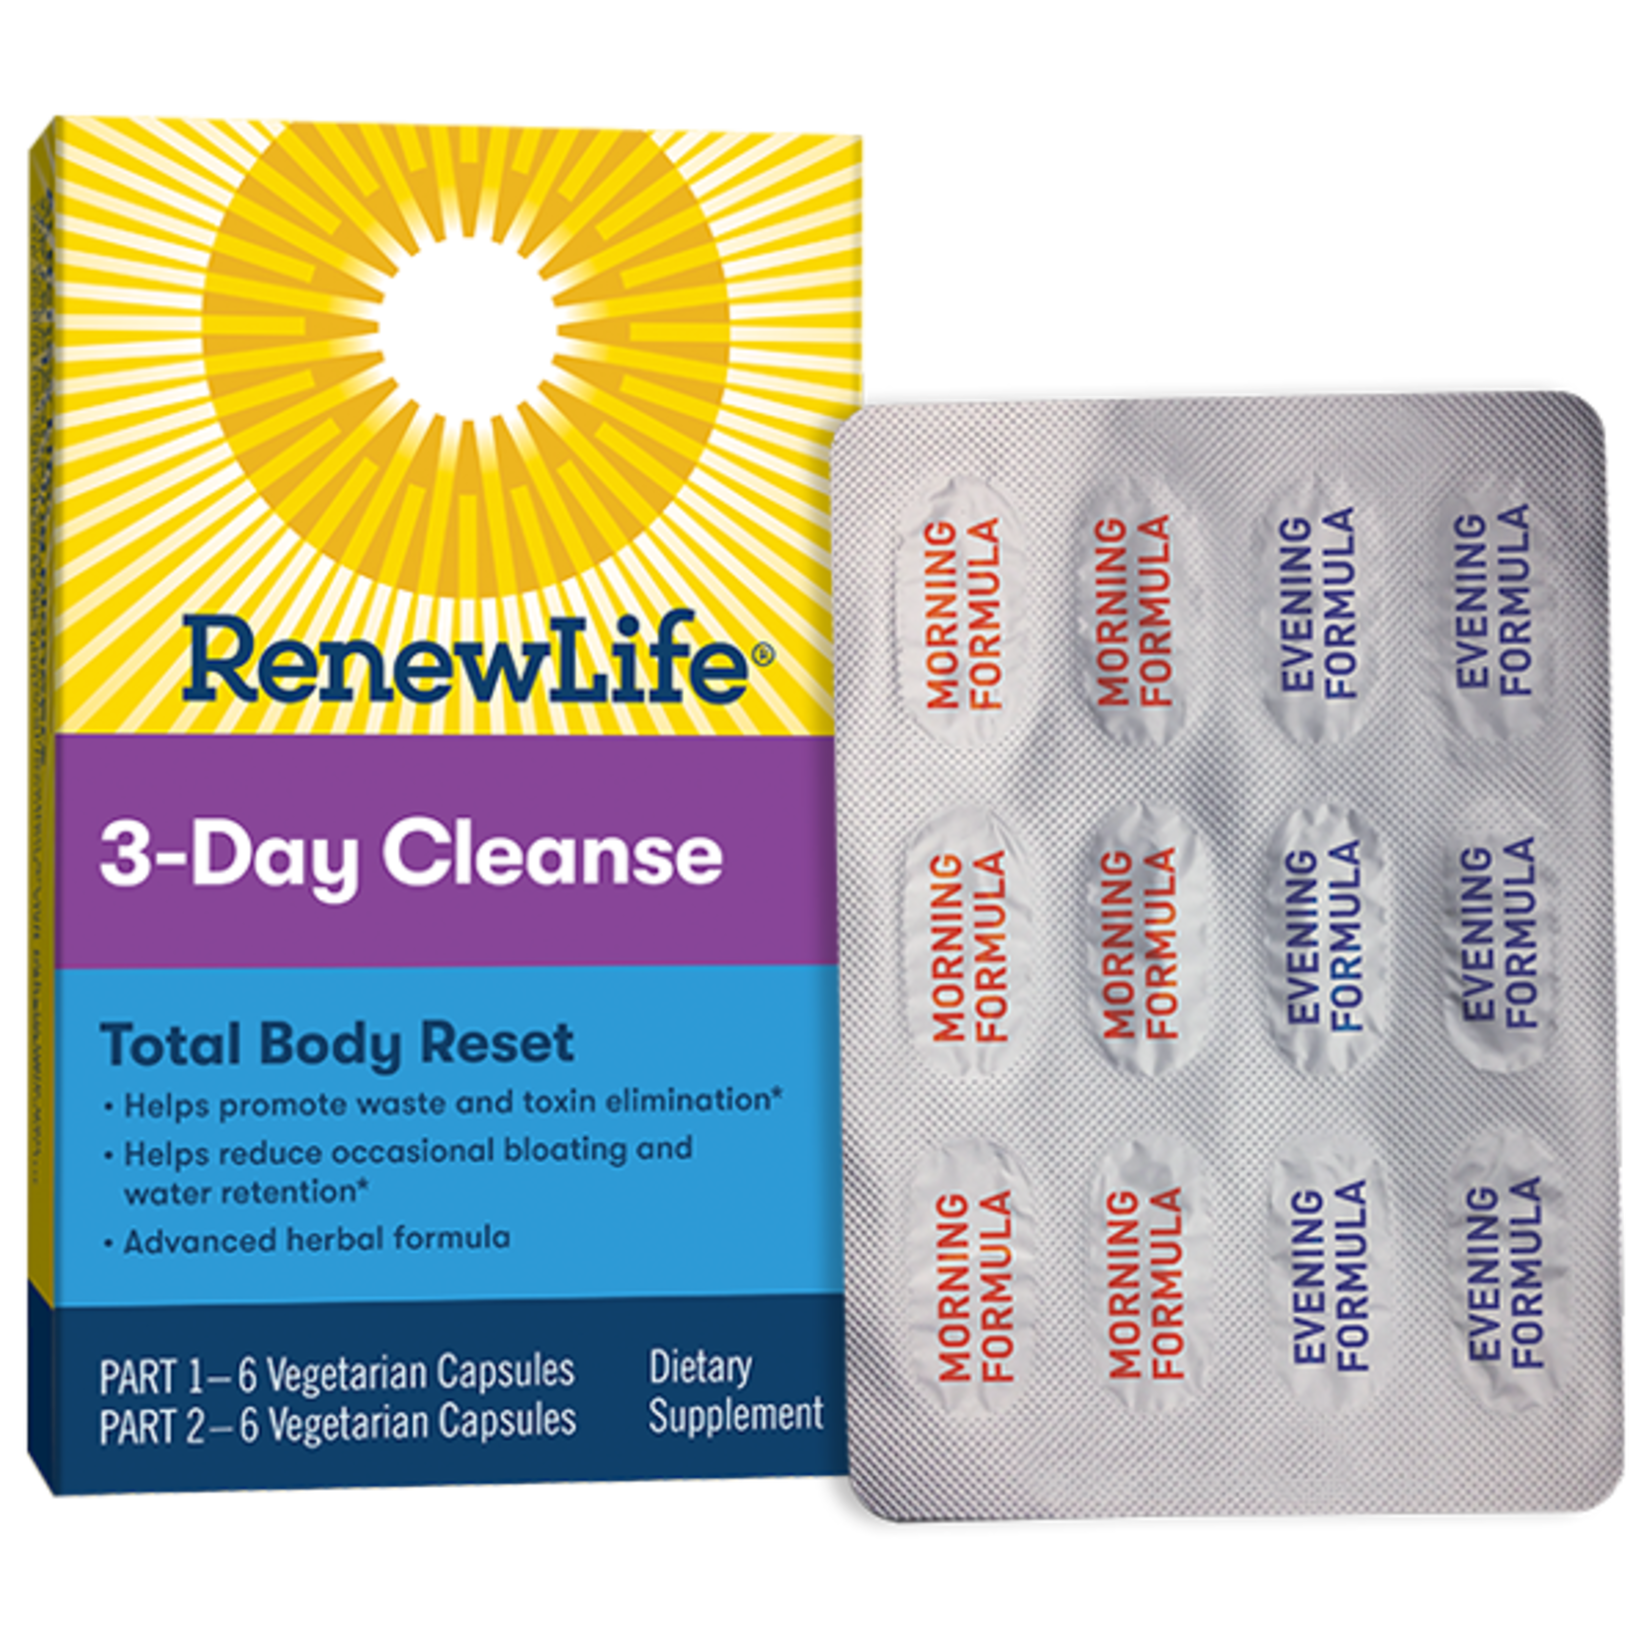 Renew Life Renew Life - 3 Day Cleanse Program Total Body Reset - 2-Part Kit